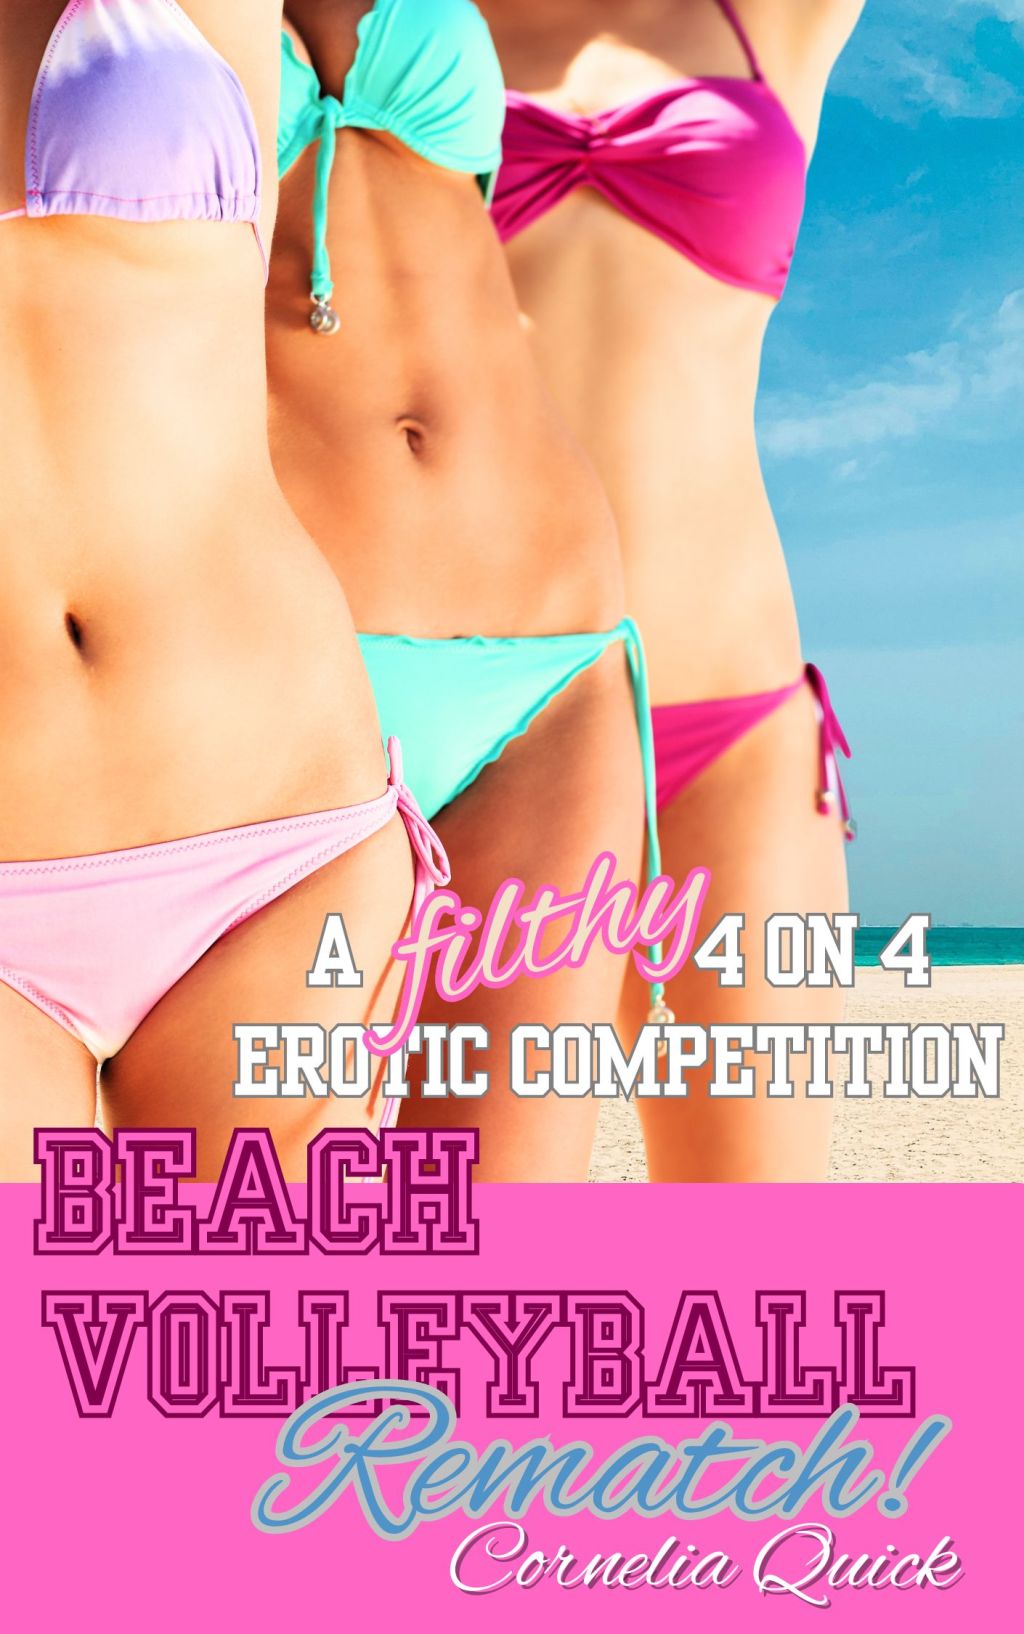 Get “Beach Volleyball Rematch!” FREE until April 15!